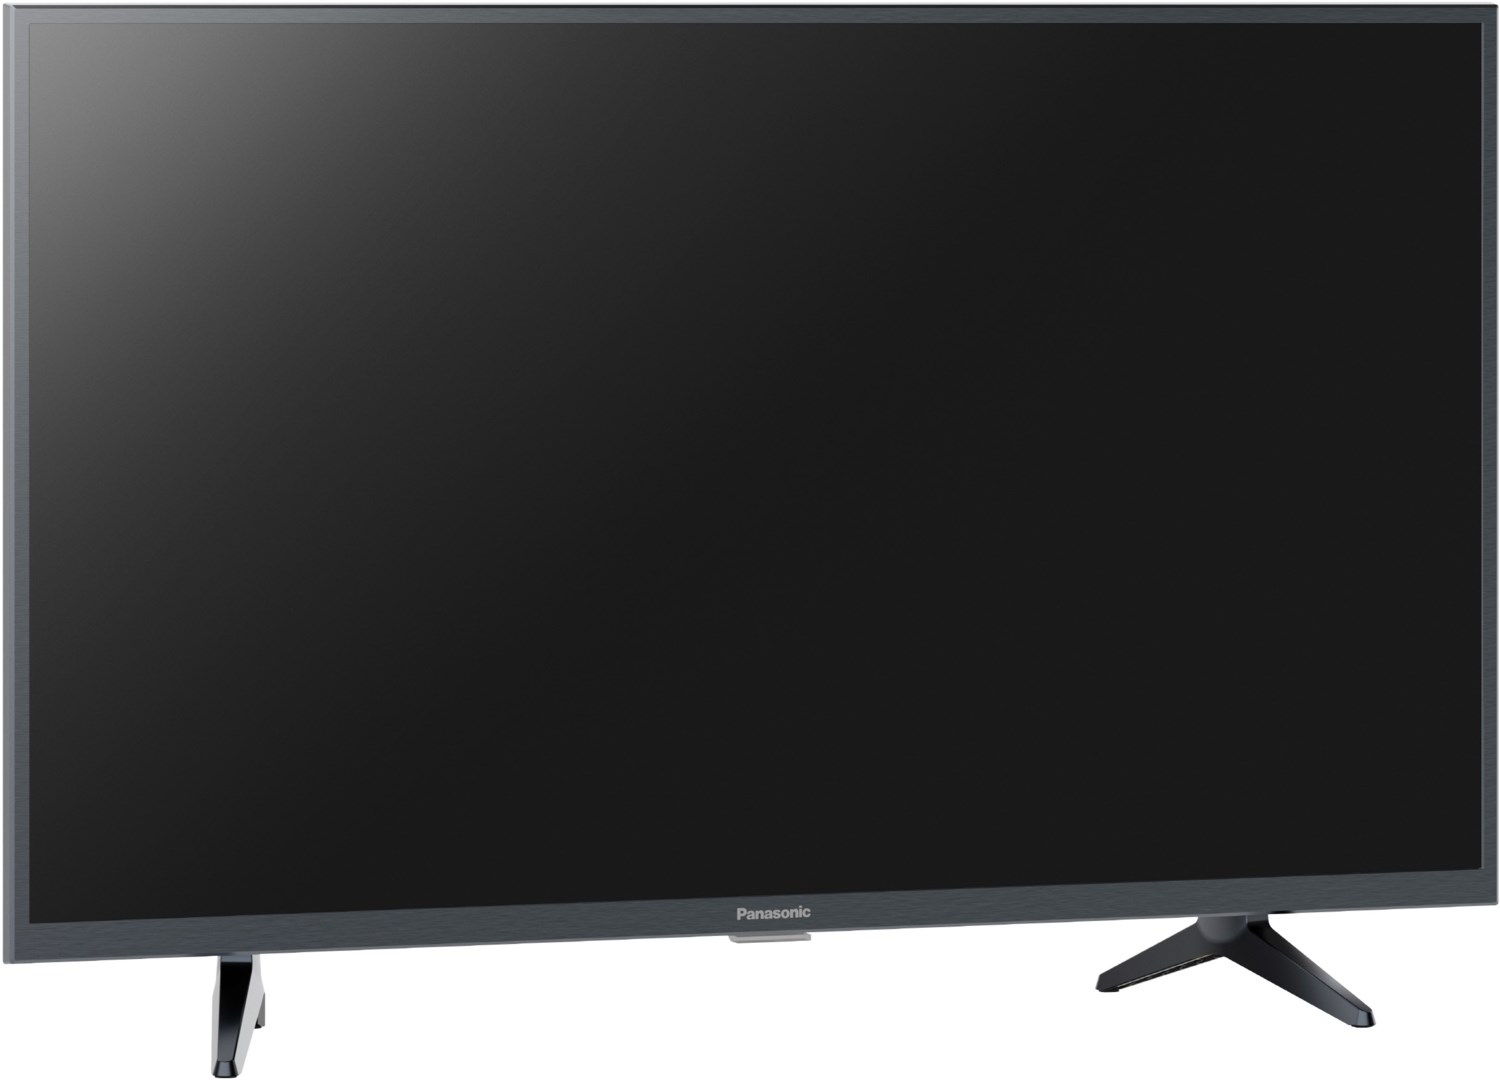 Panasonic 32 Zoll (80cm) LCD-TV mit LED-Technik, schwarz